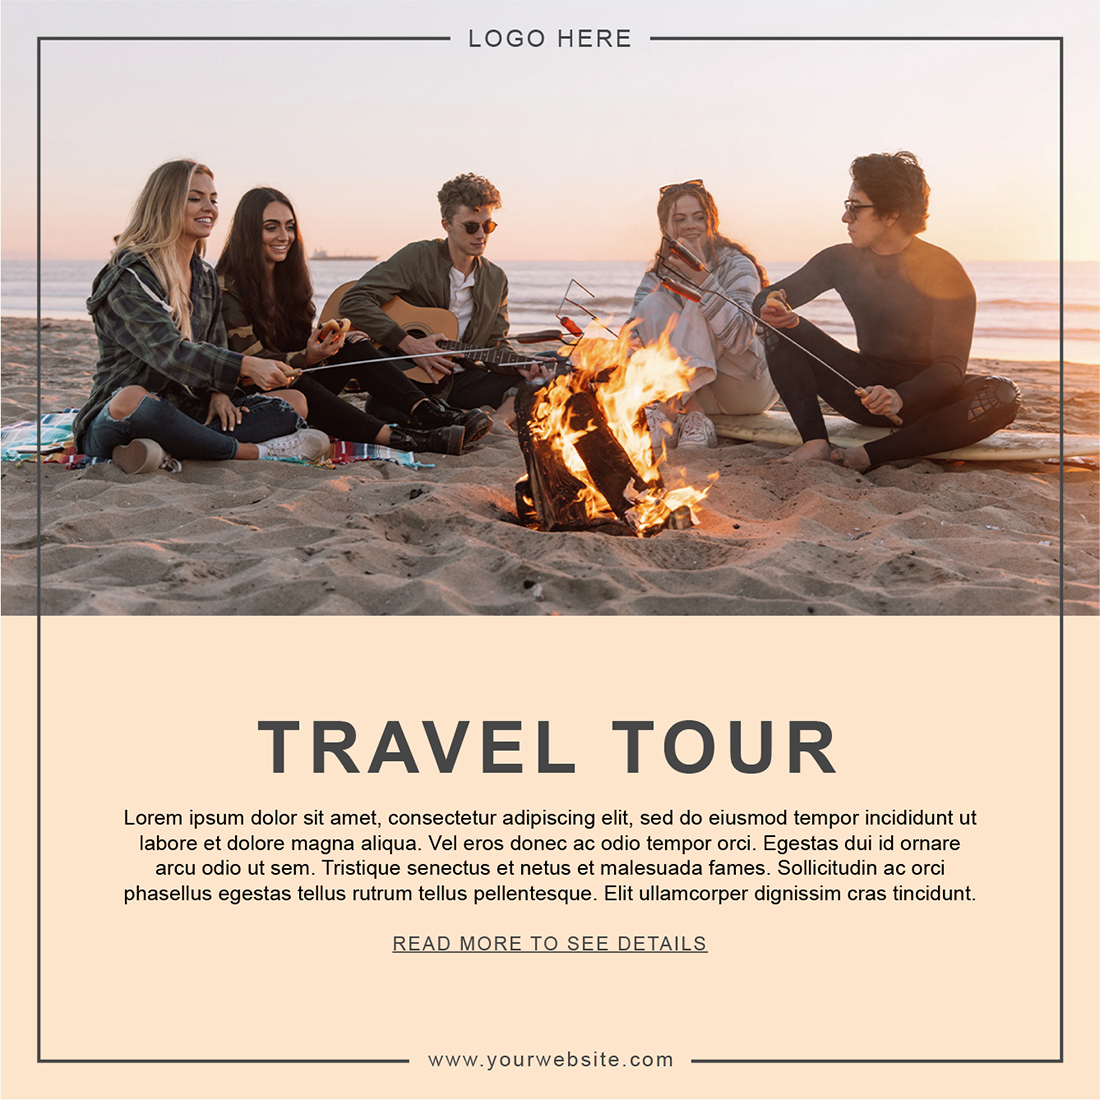 Travelling Theme Social Media Post Templates travel tour.